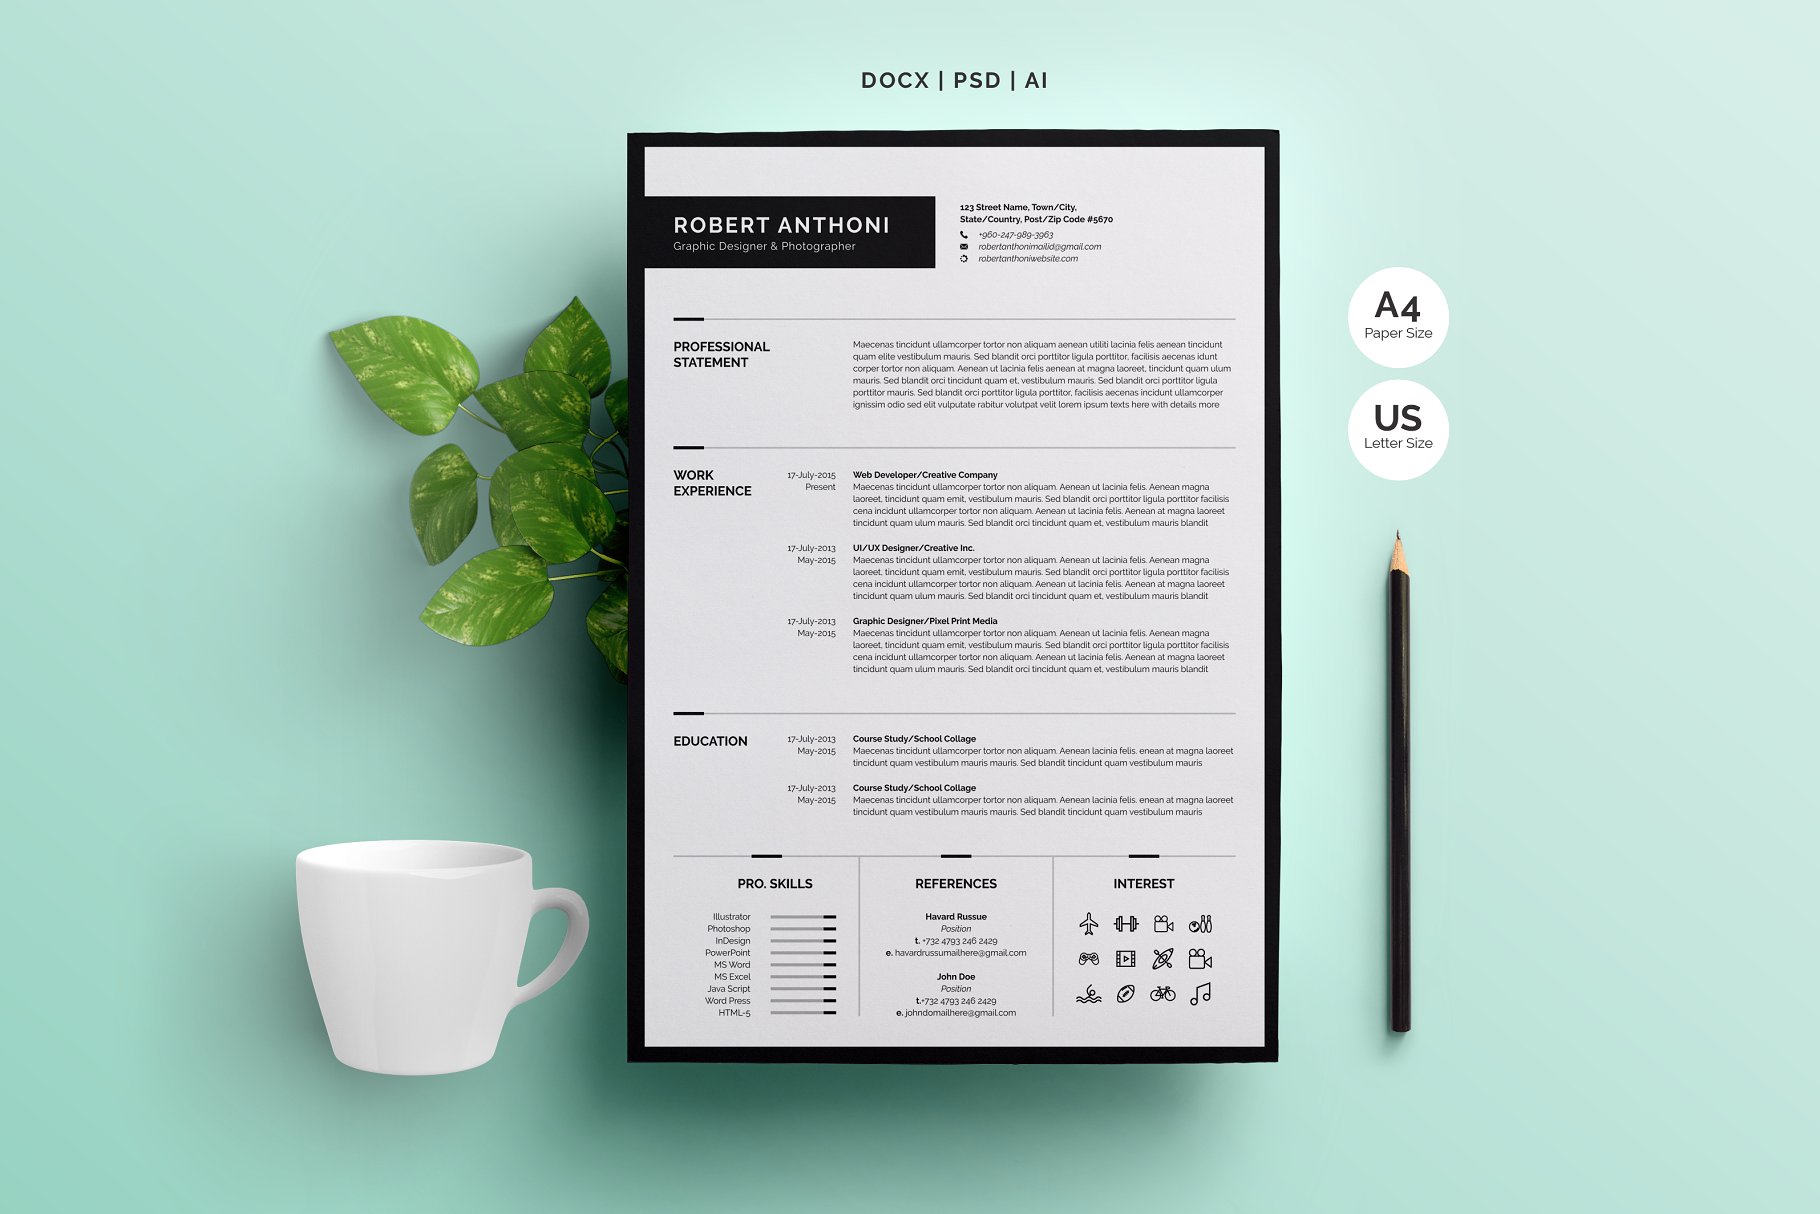 简约风格电子简历模板[4页] Clean Resume Template 4 Pages插图